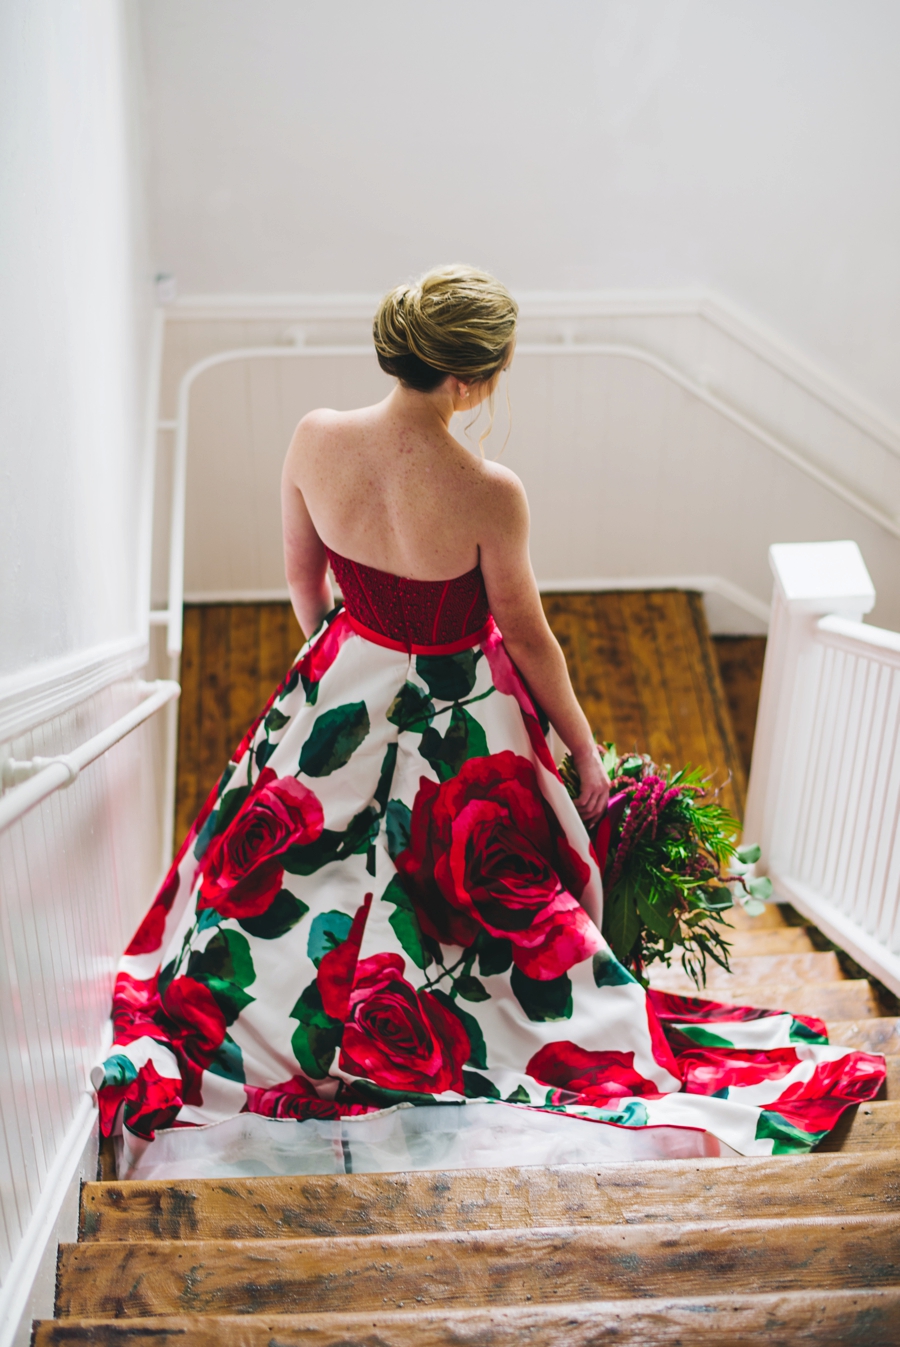 Glamorous Red and White Wedding Inspiration via TheELD.com